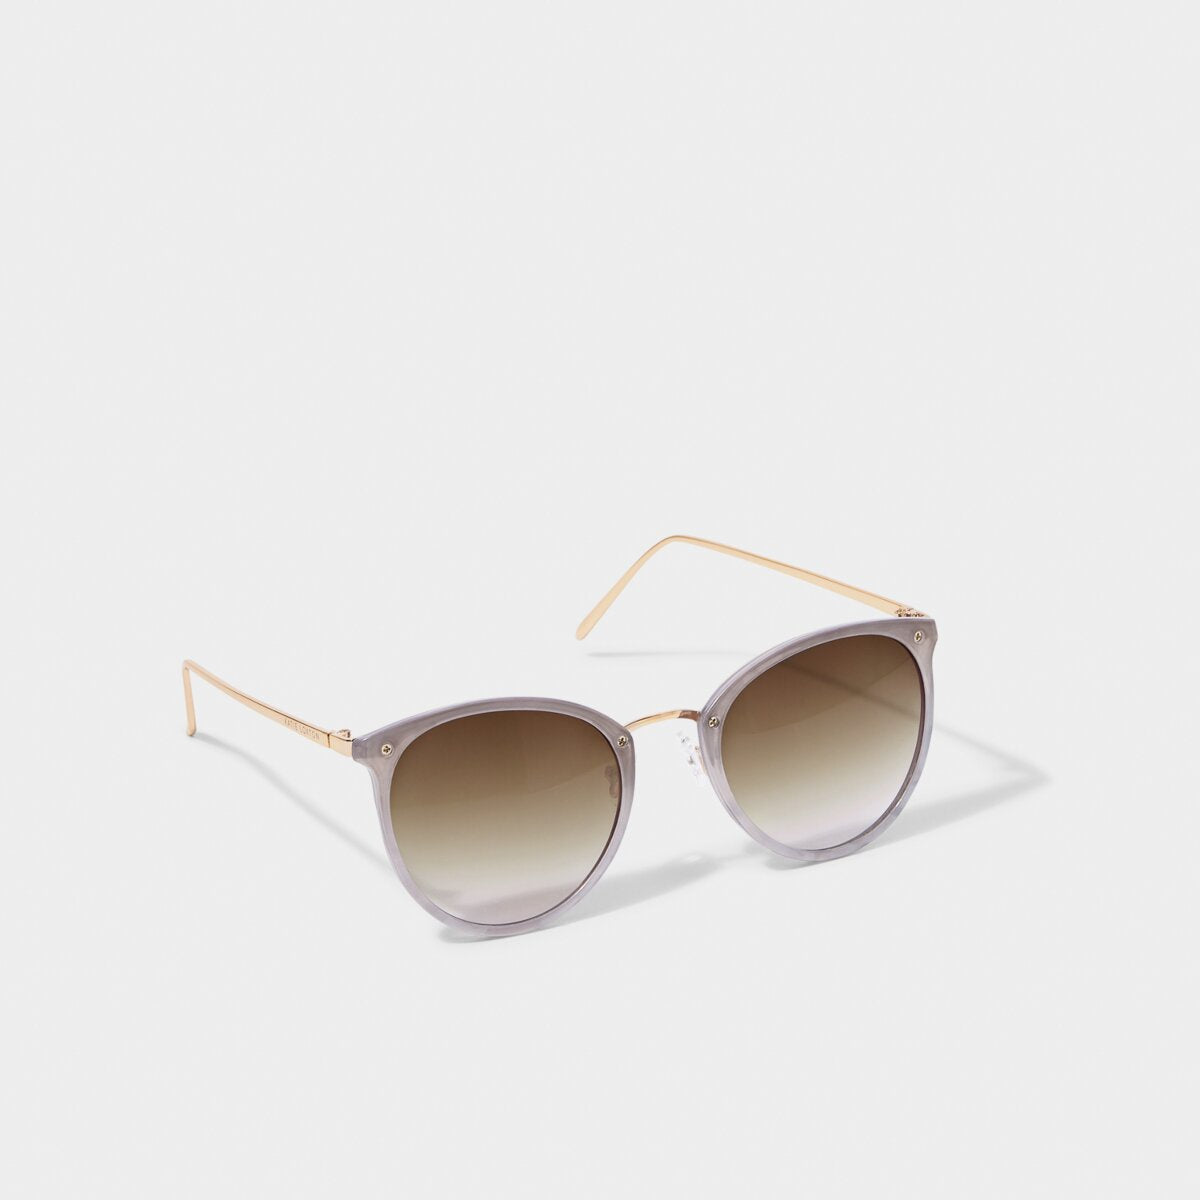 Santorini sunglasses - Taupe